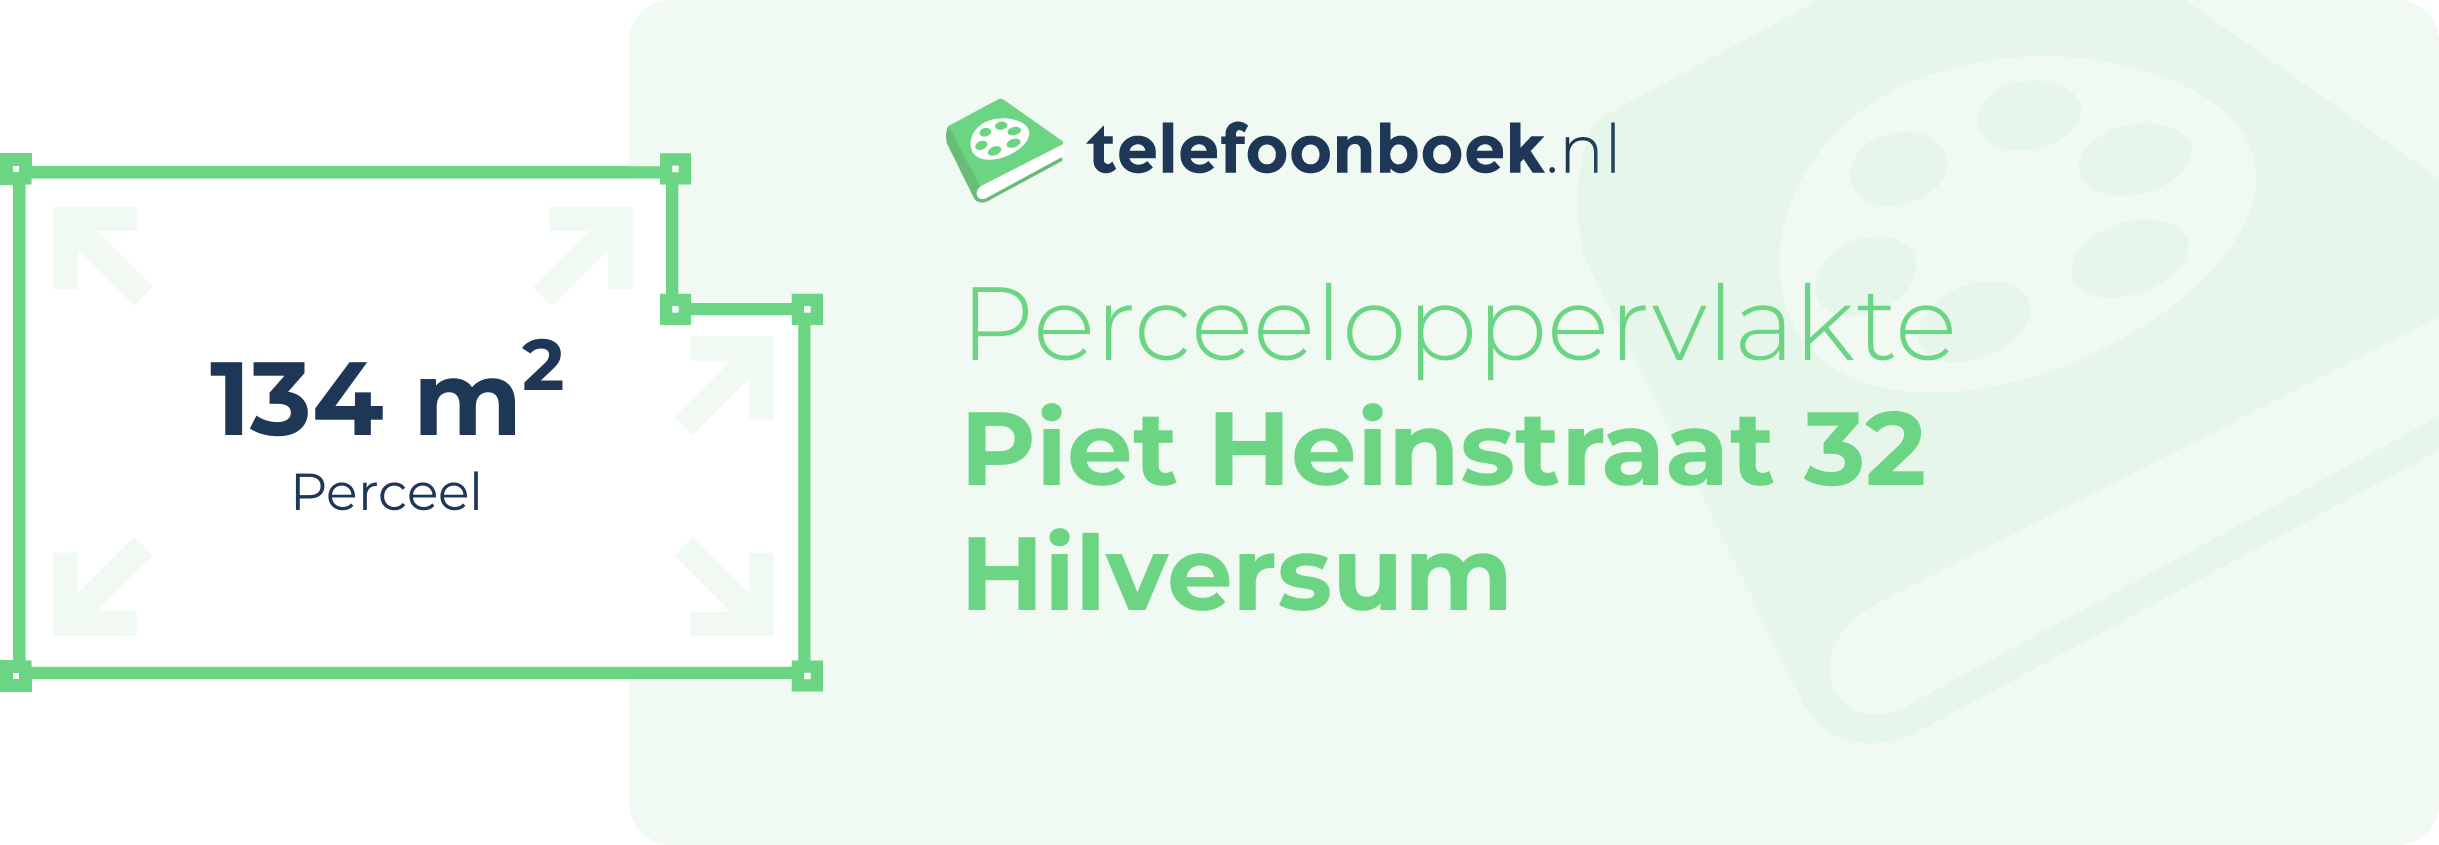 Perceeloppervlakte Piet Heinstraat 32 Hilversum